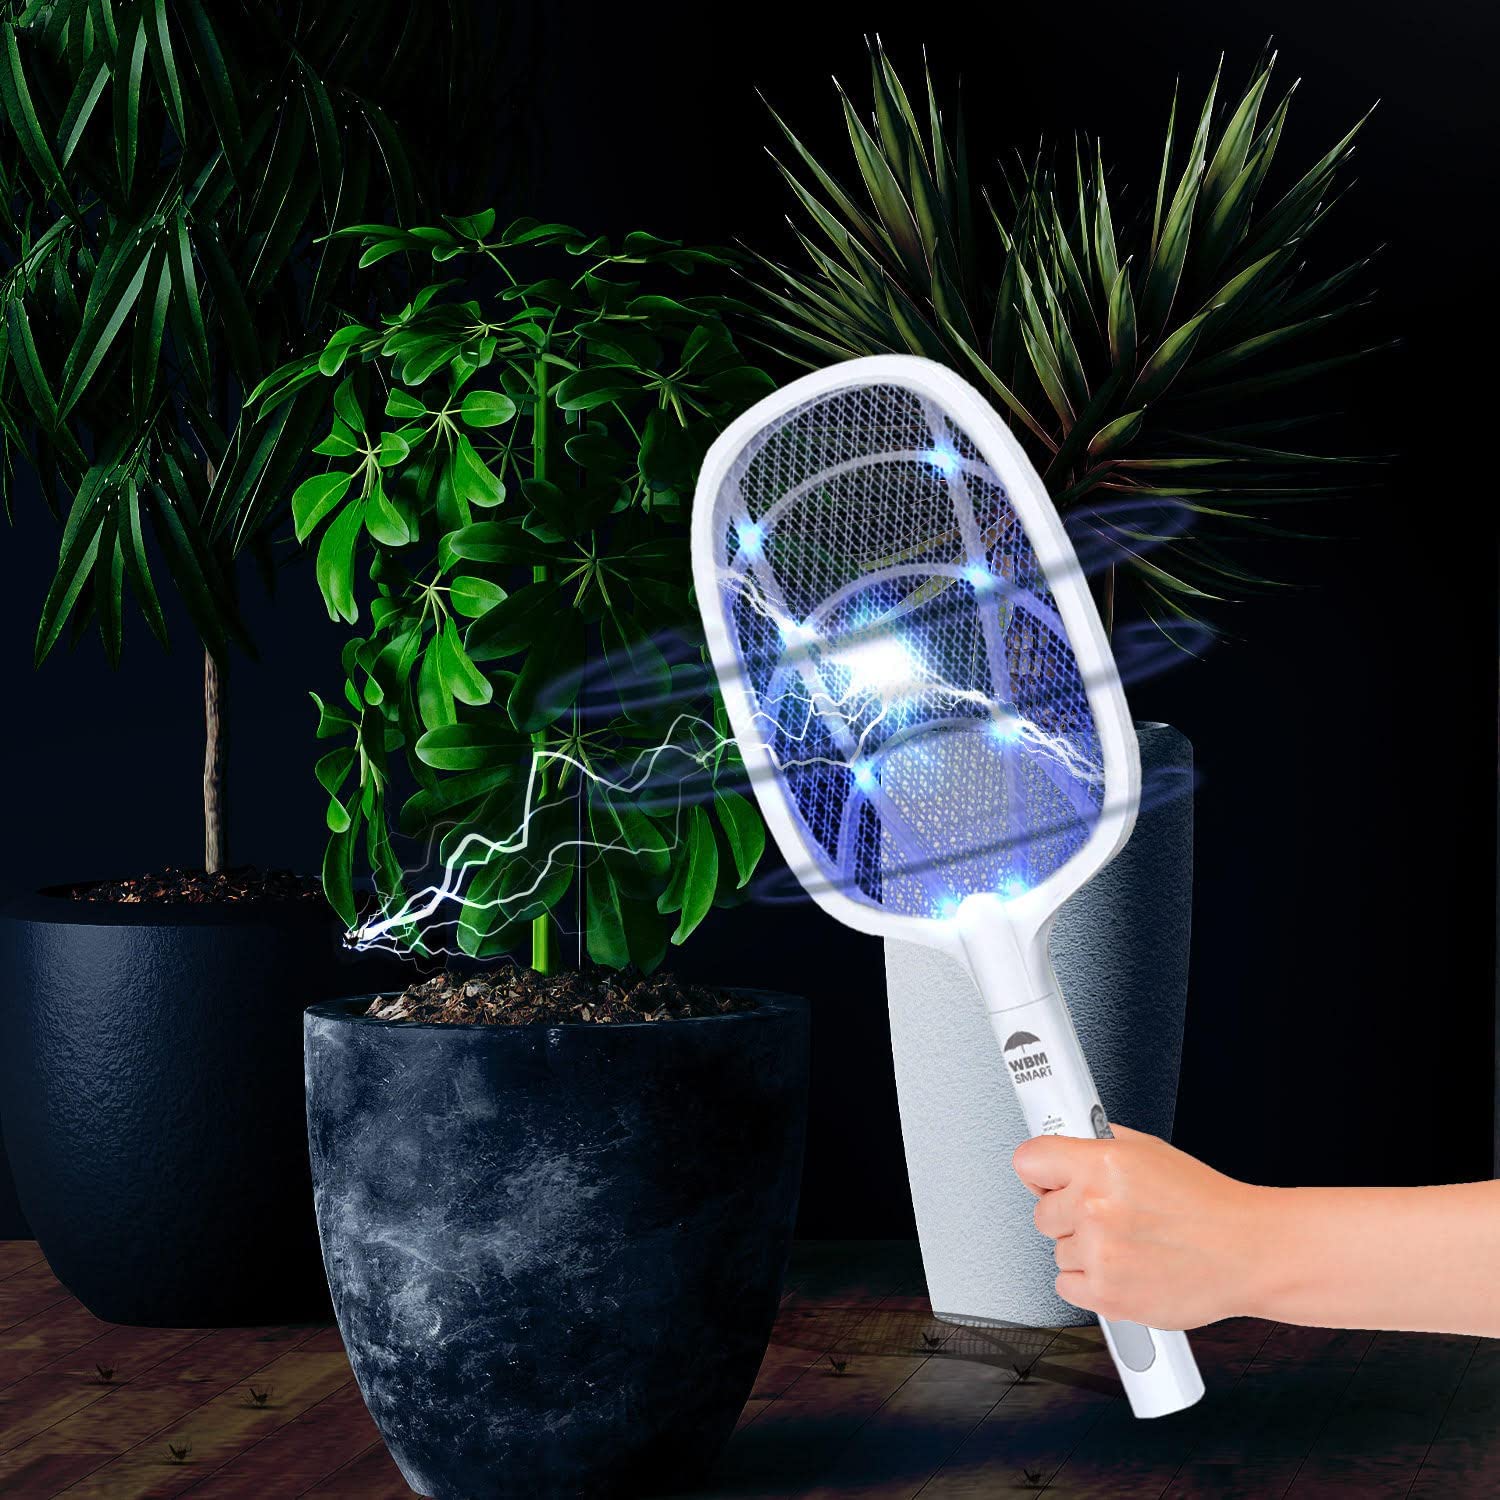 Mosquito killer lamp Insect killer electric bug zapper flyswatter